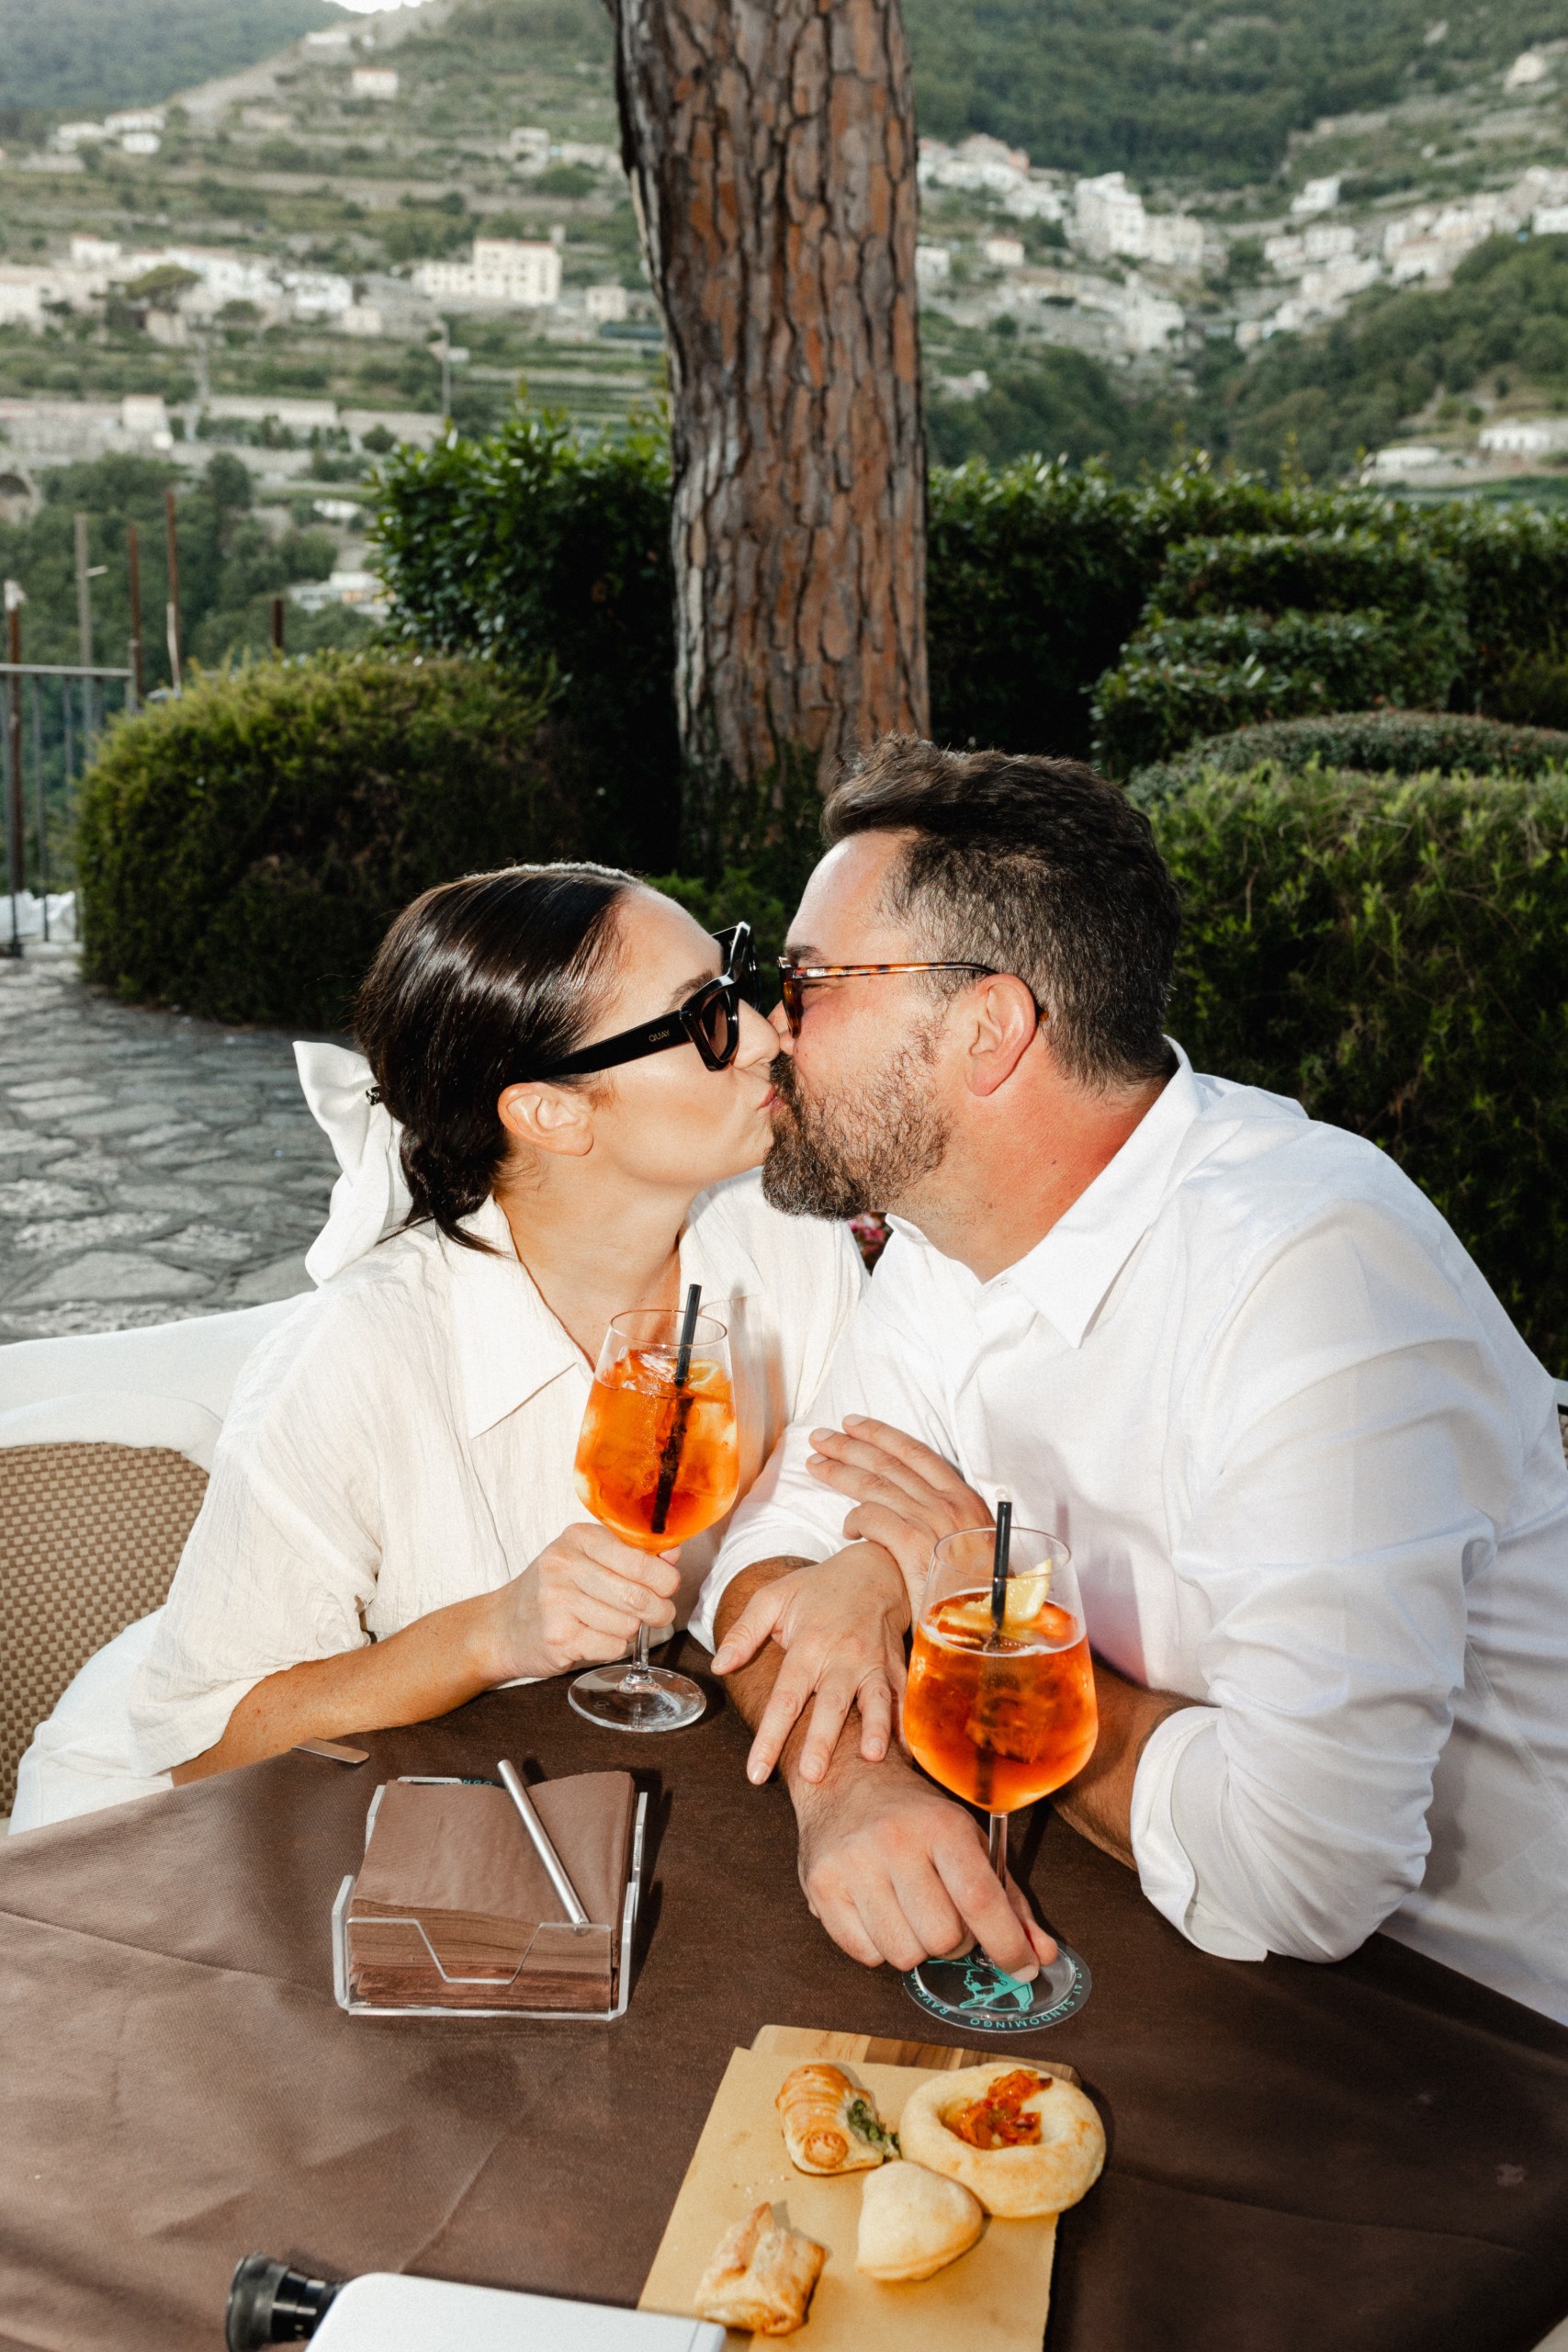 Couple kissing and having Aperol Spritz at a Italian Café